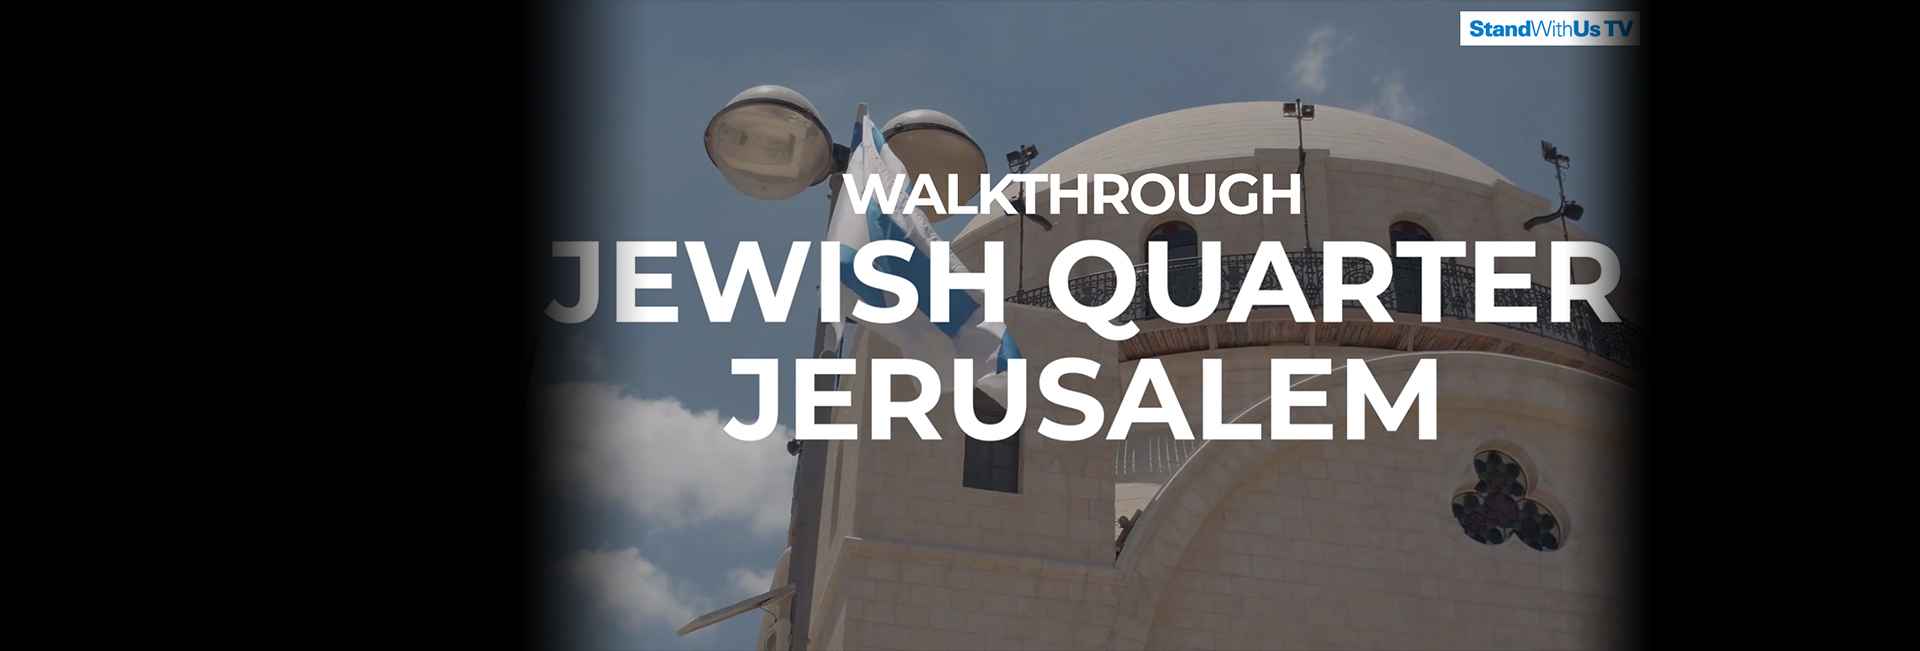 Jewish Quarter of the Old City, Jerusalem | WalkThrough